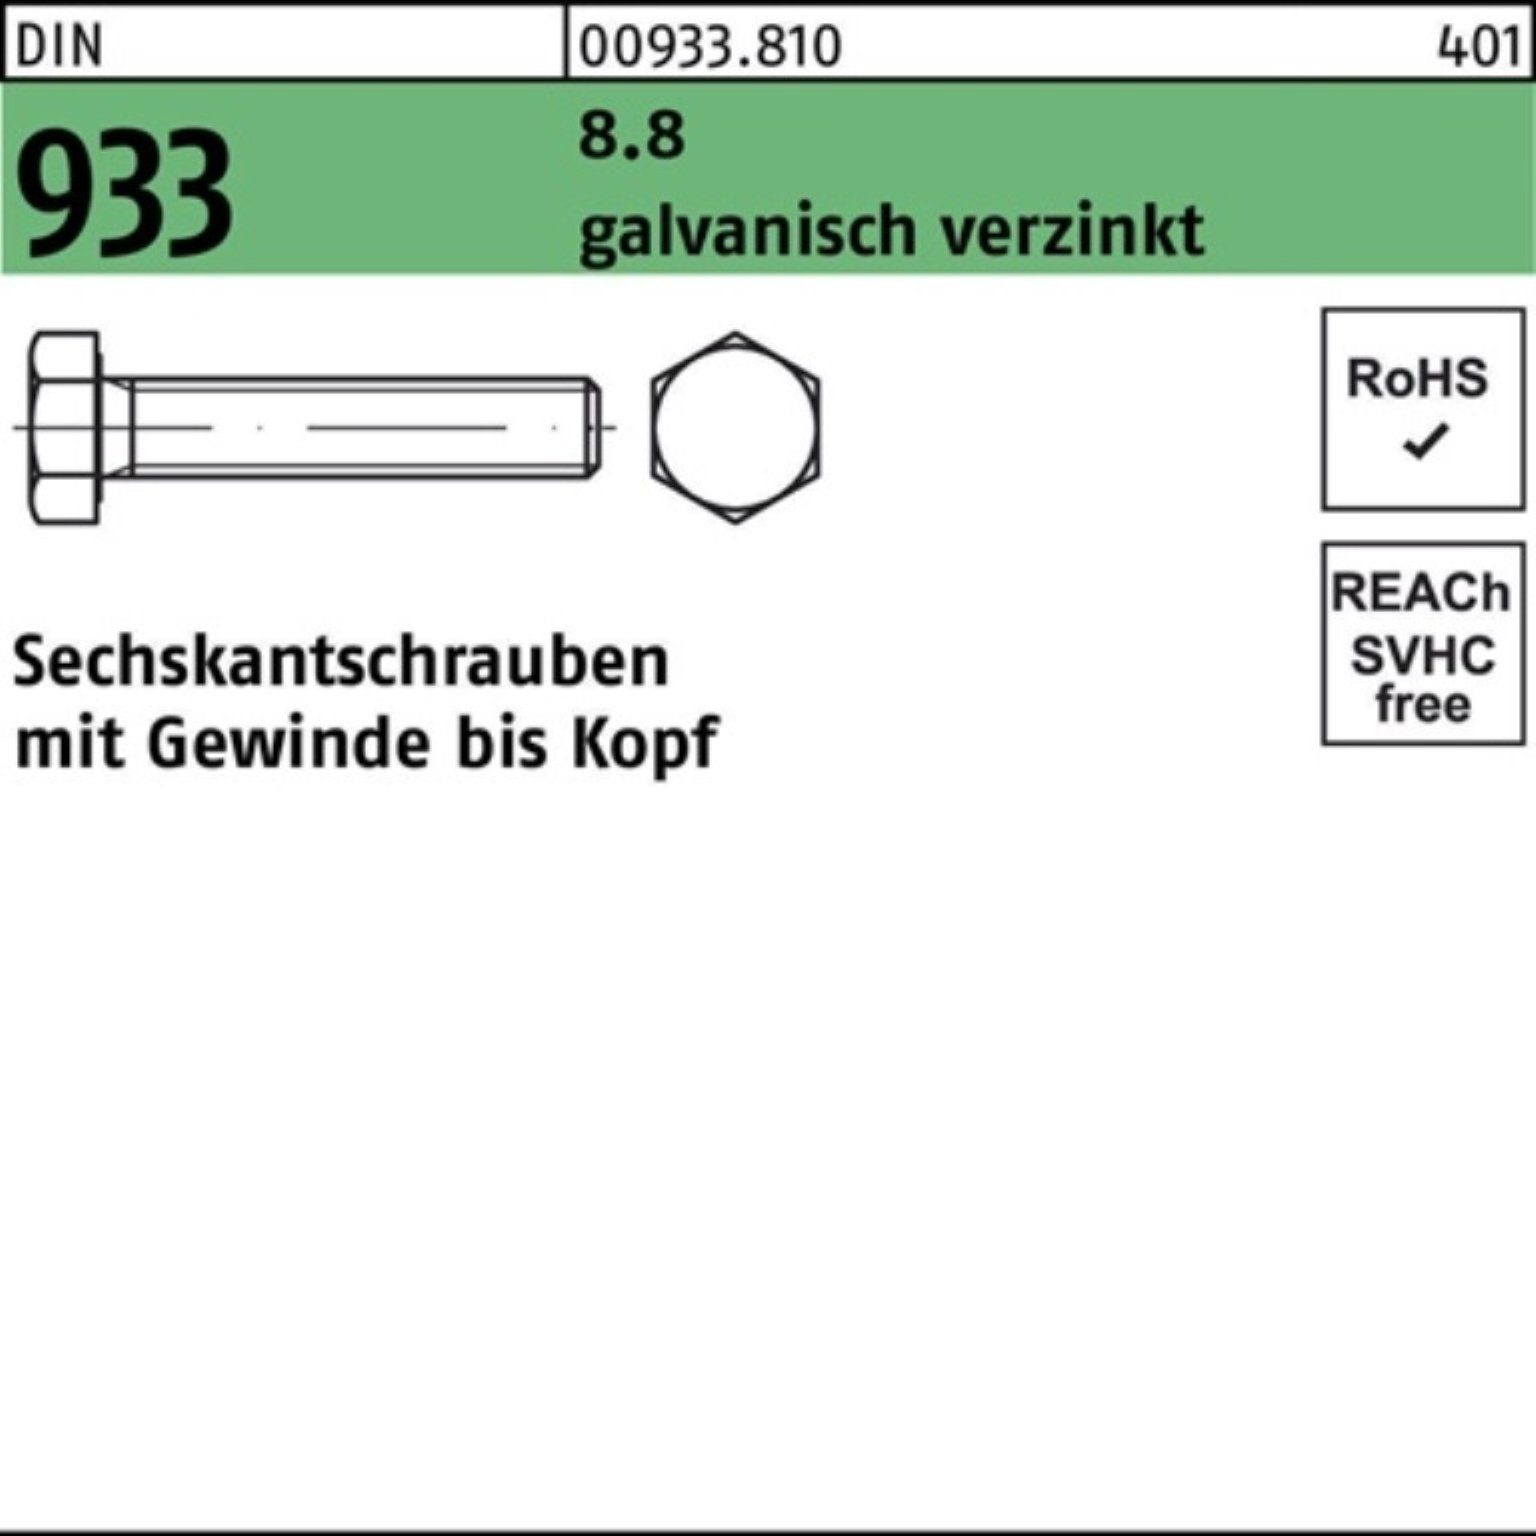 Reyher Sechskantschraube 95 100er Stü Sechskantschraube VG 933 galv.verz. M16x DIN Pack 8.8 25